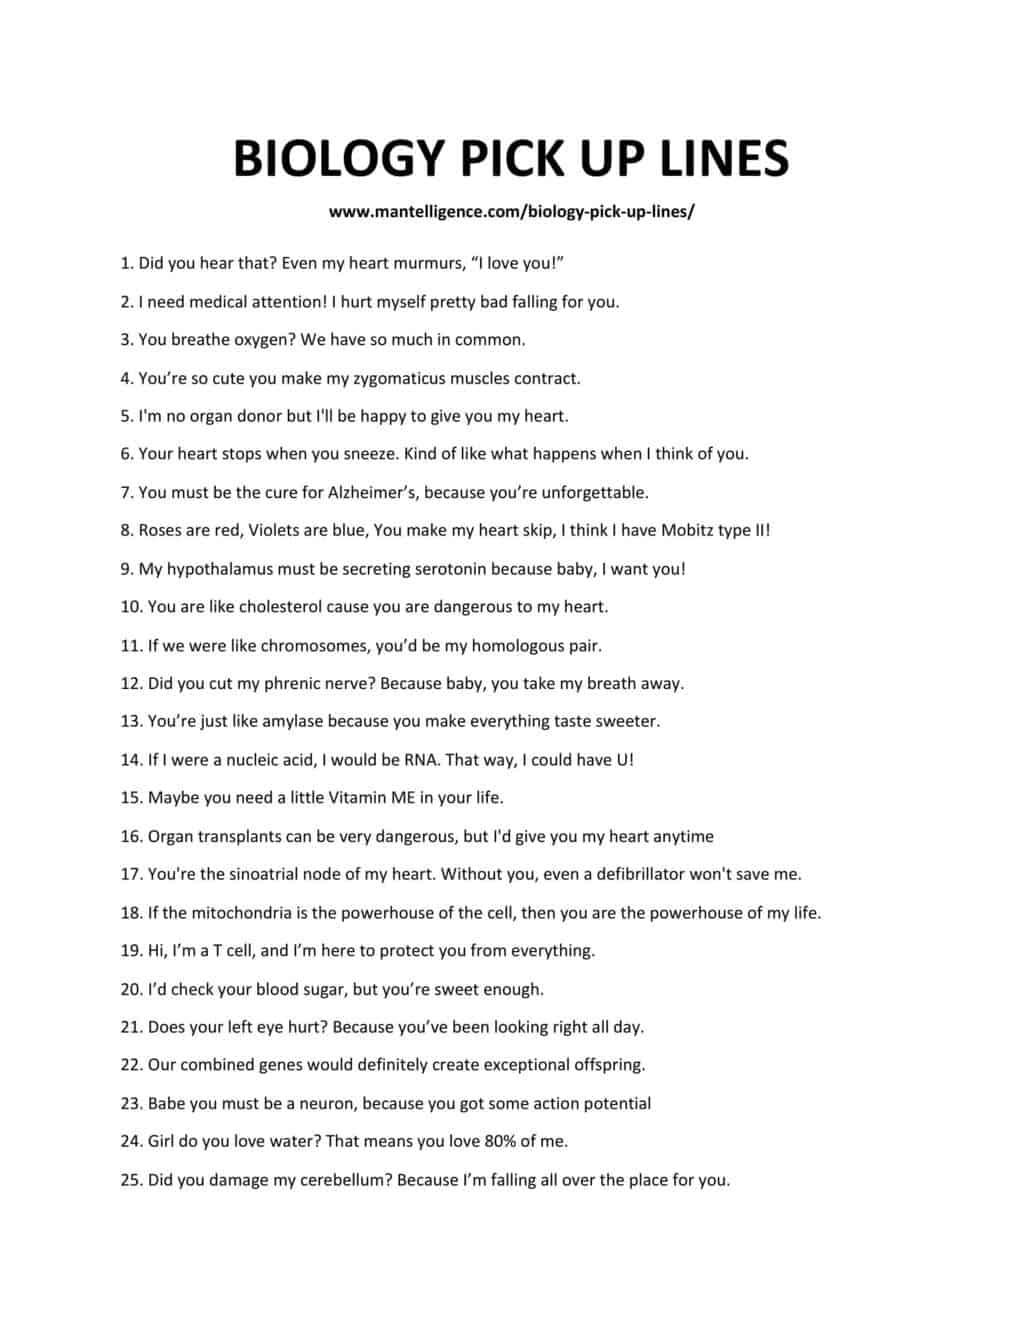 BIOLOGY PICK UP LINES-1